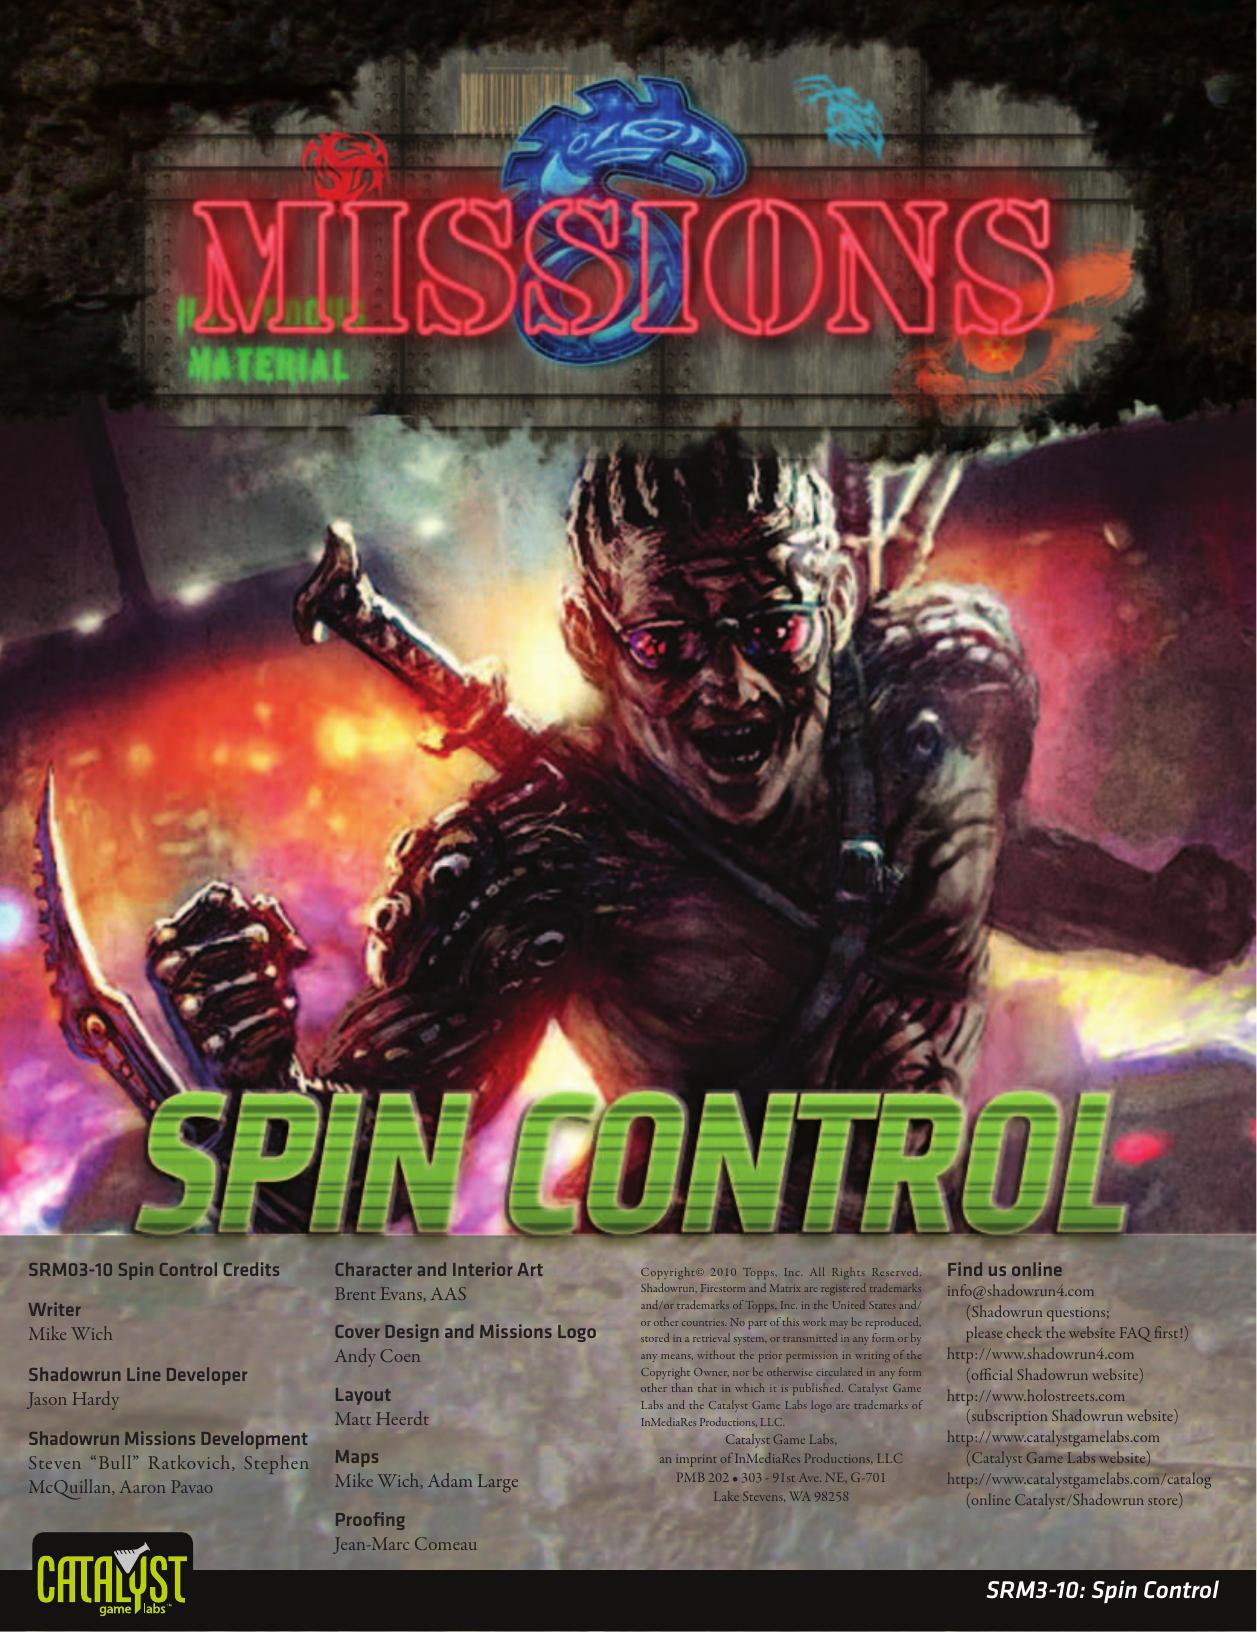 Shadowrun Mission 03-10: Spin Control